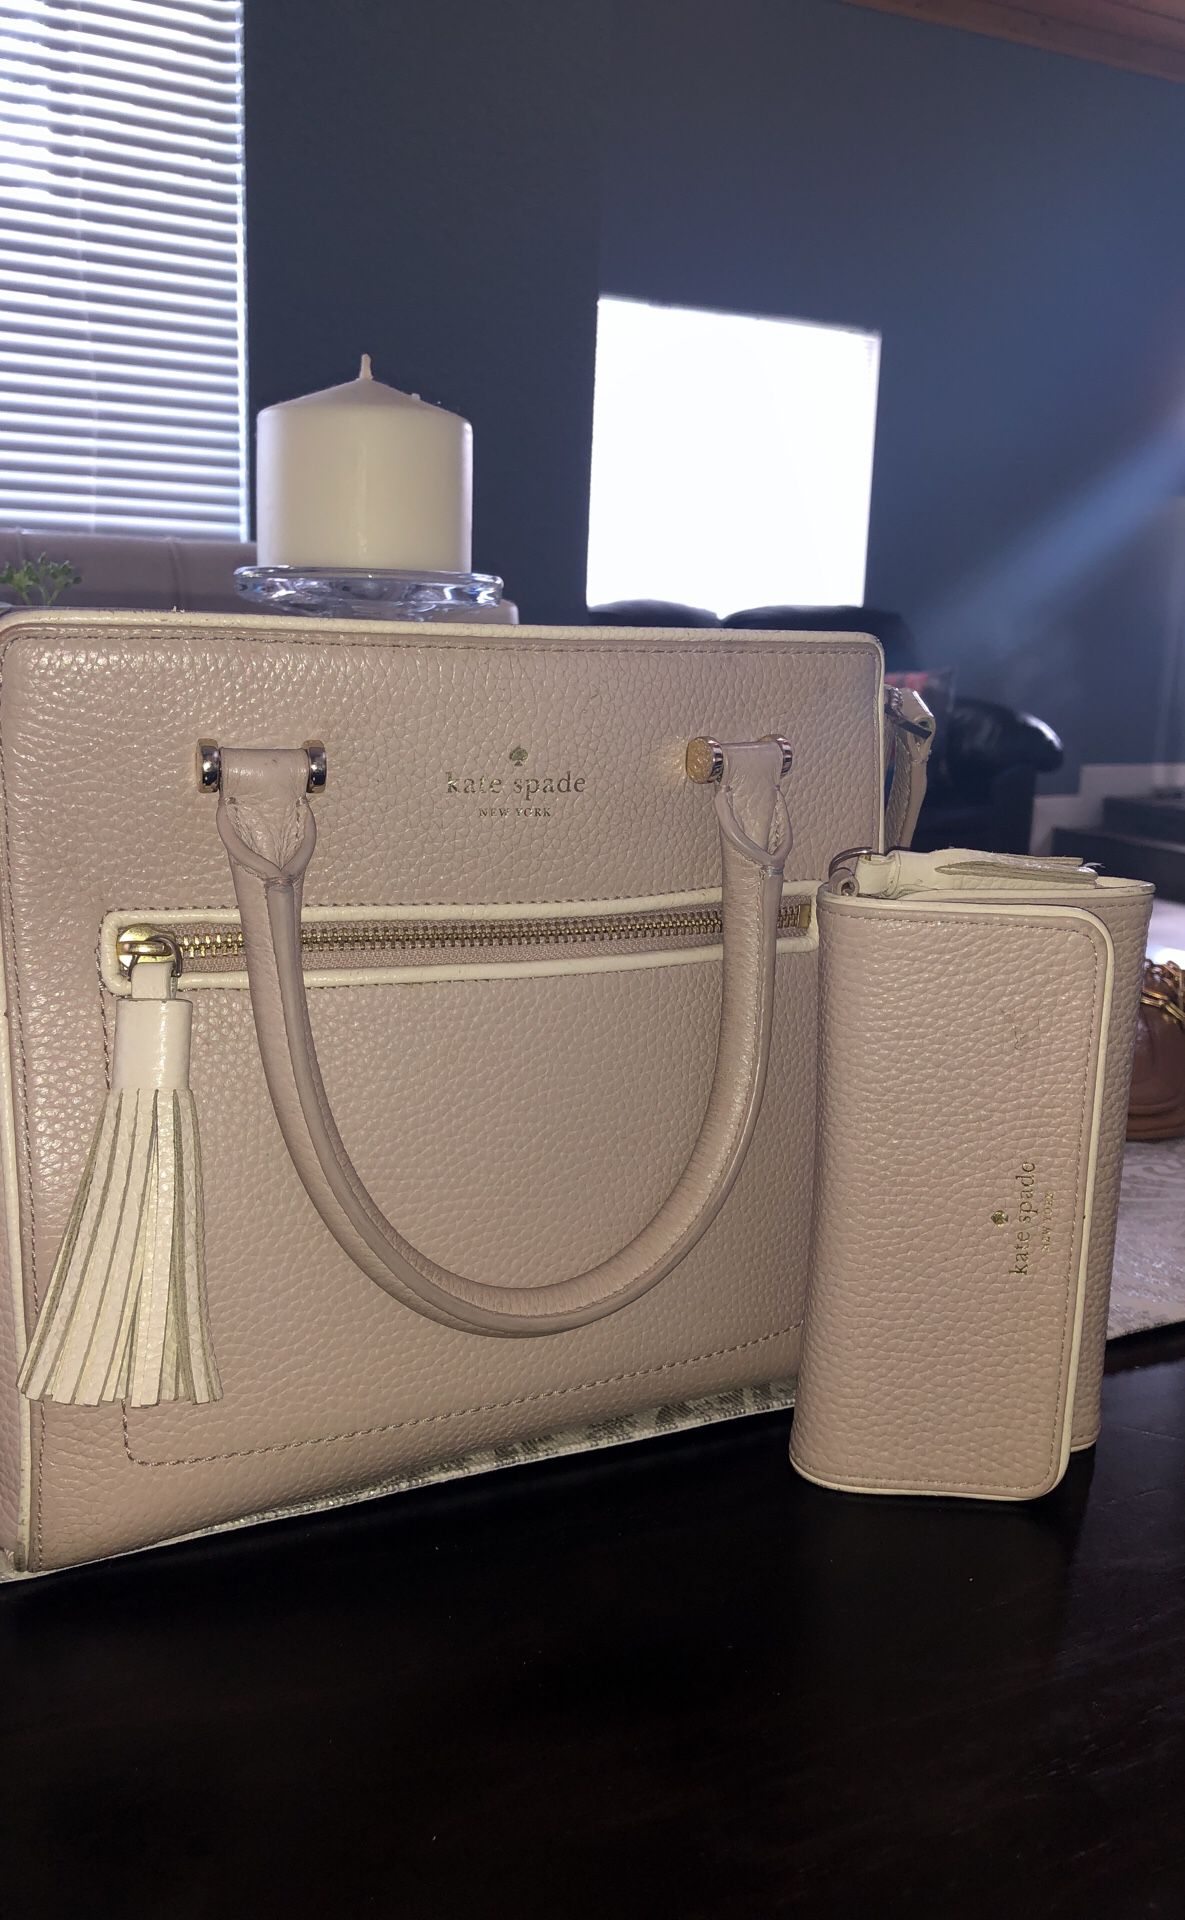 Kade spade blush pink handbag with wallet